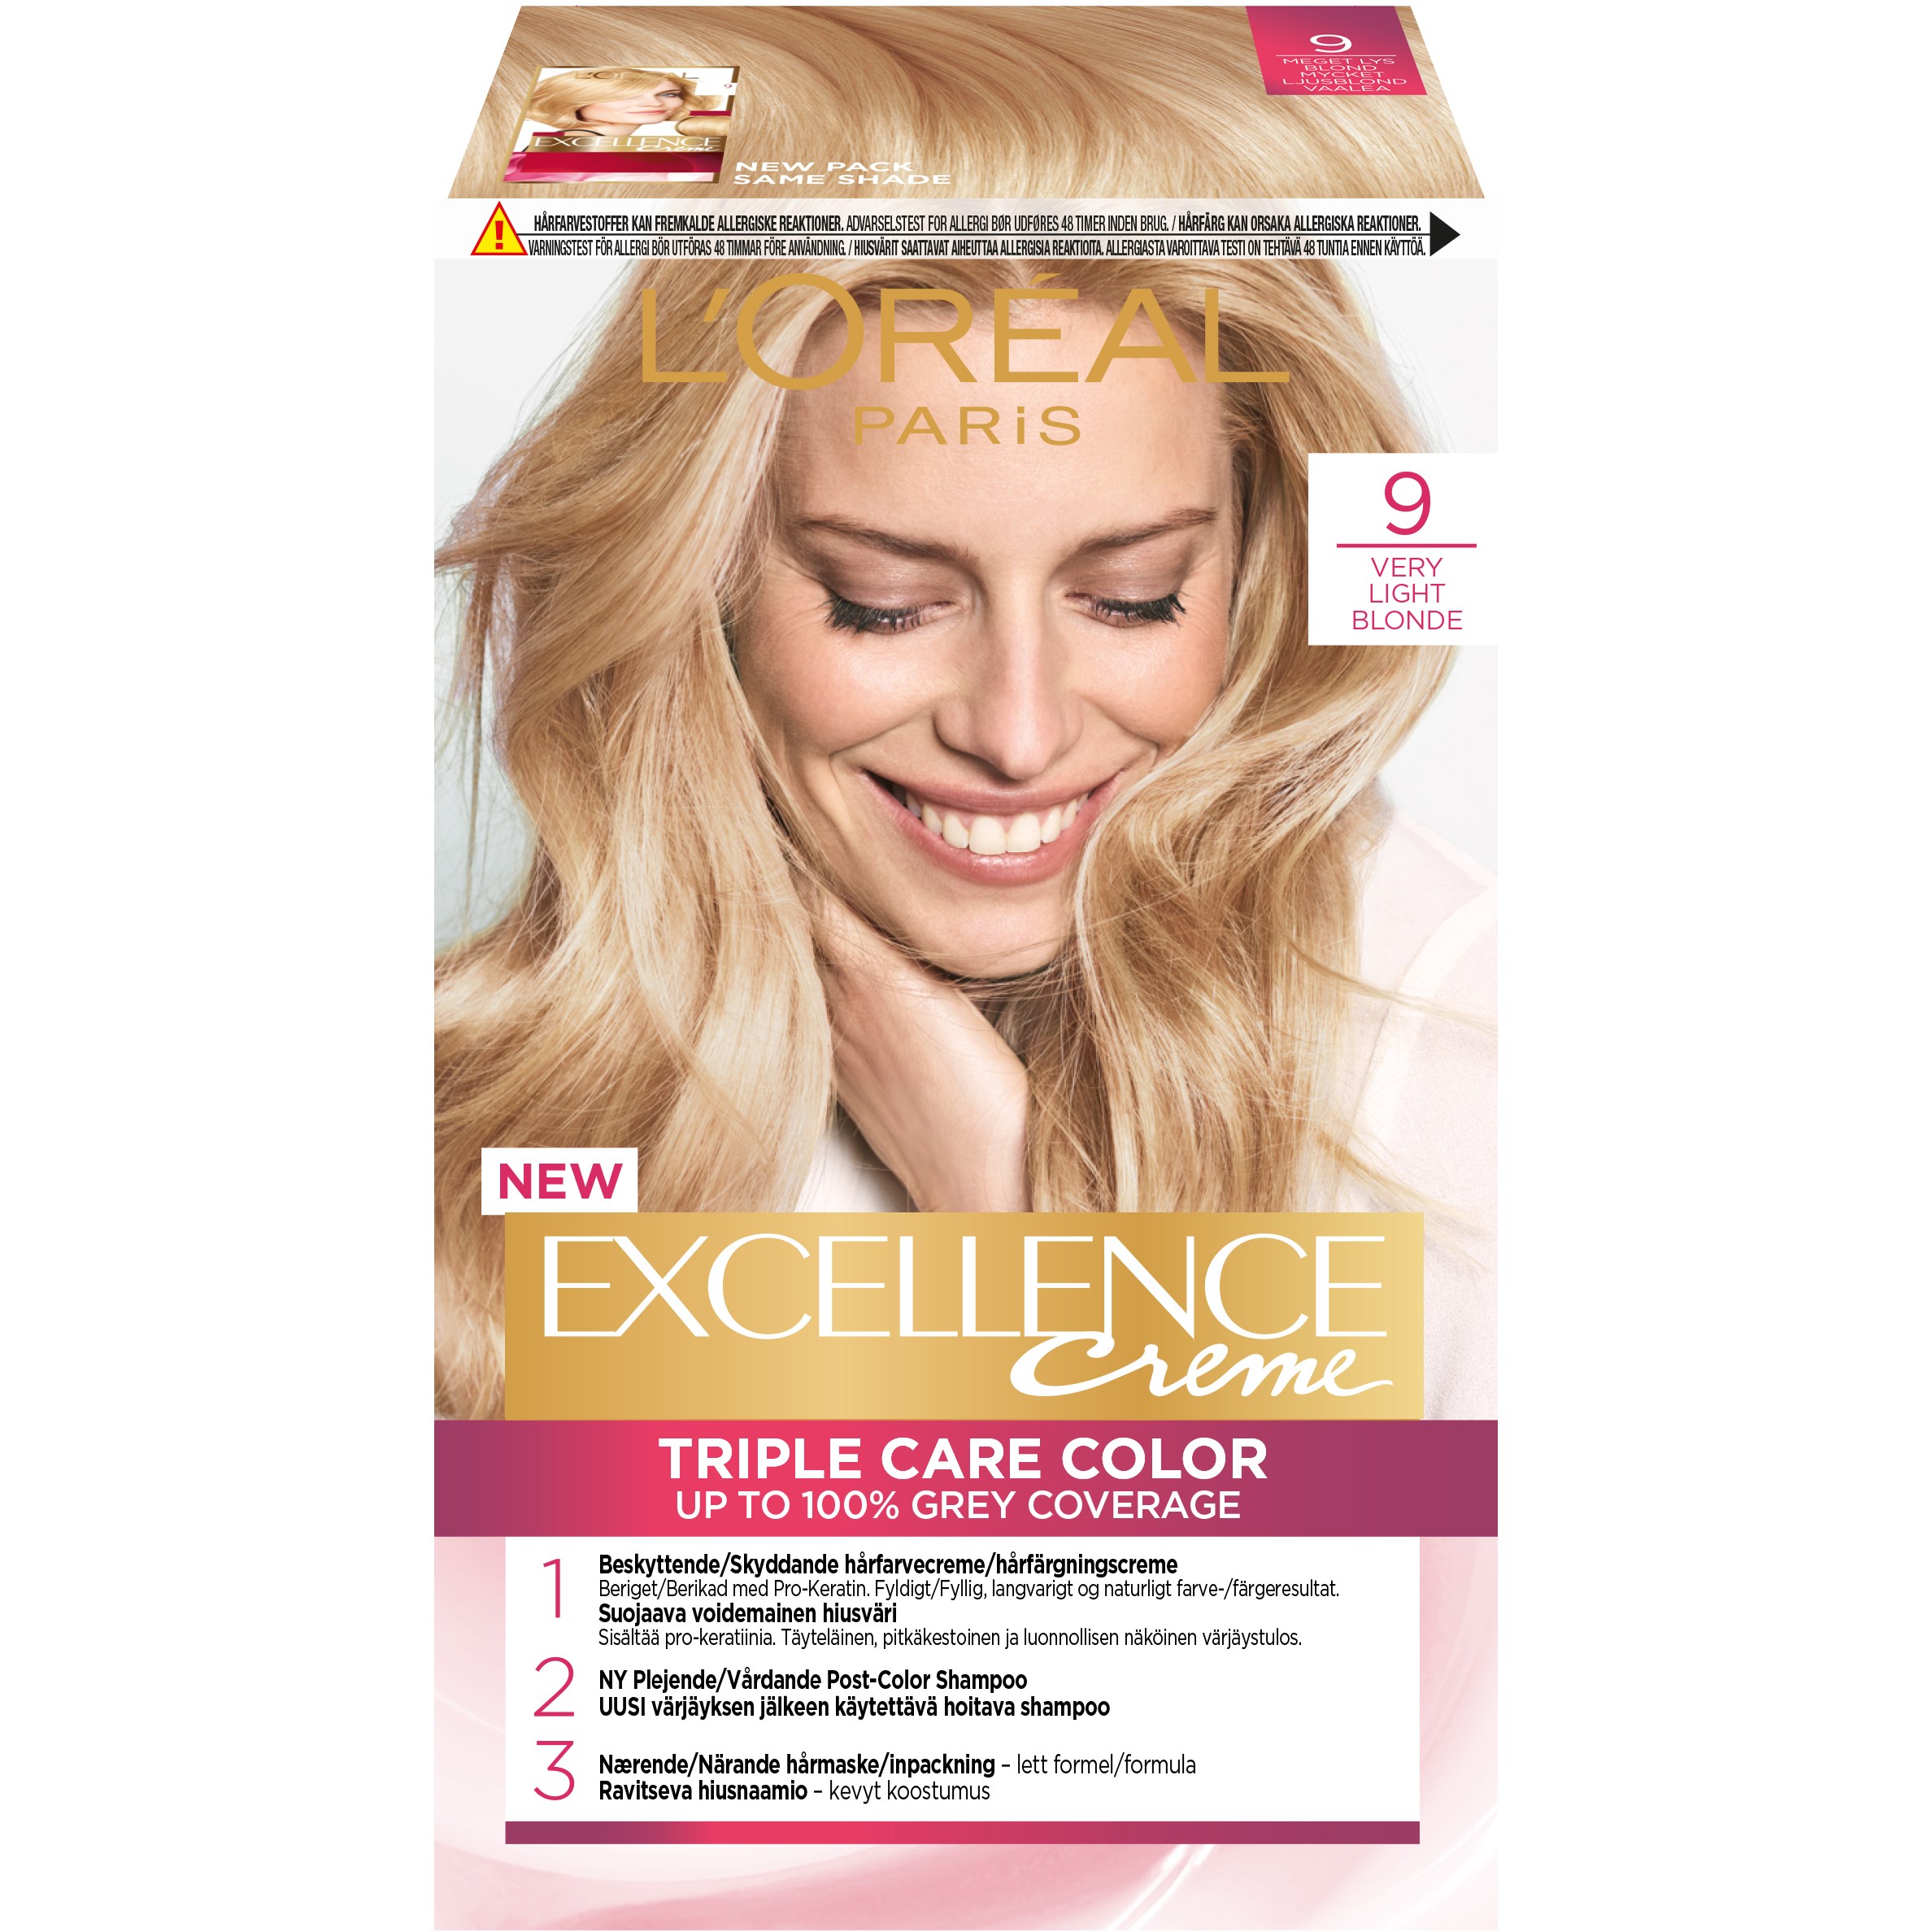 Läs mer om Loreal Paris Excellence Creme 9 Very Light Blonde